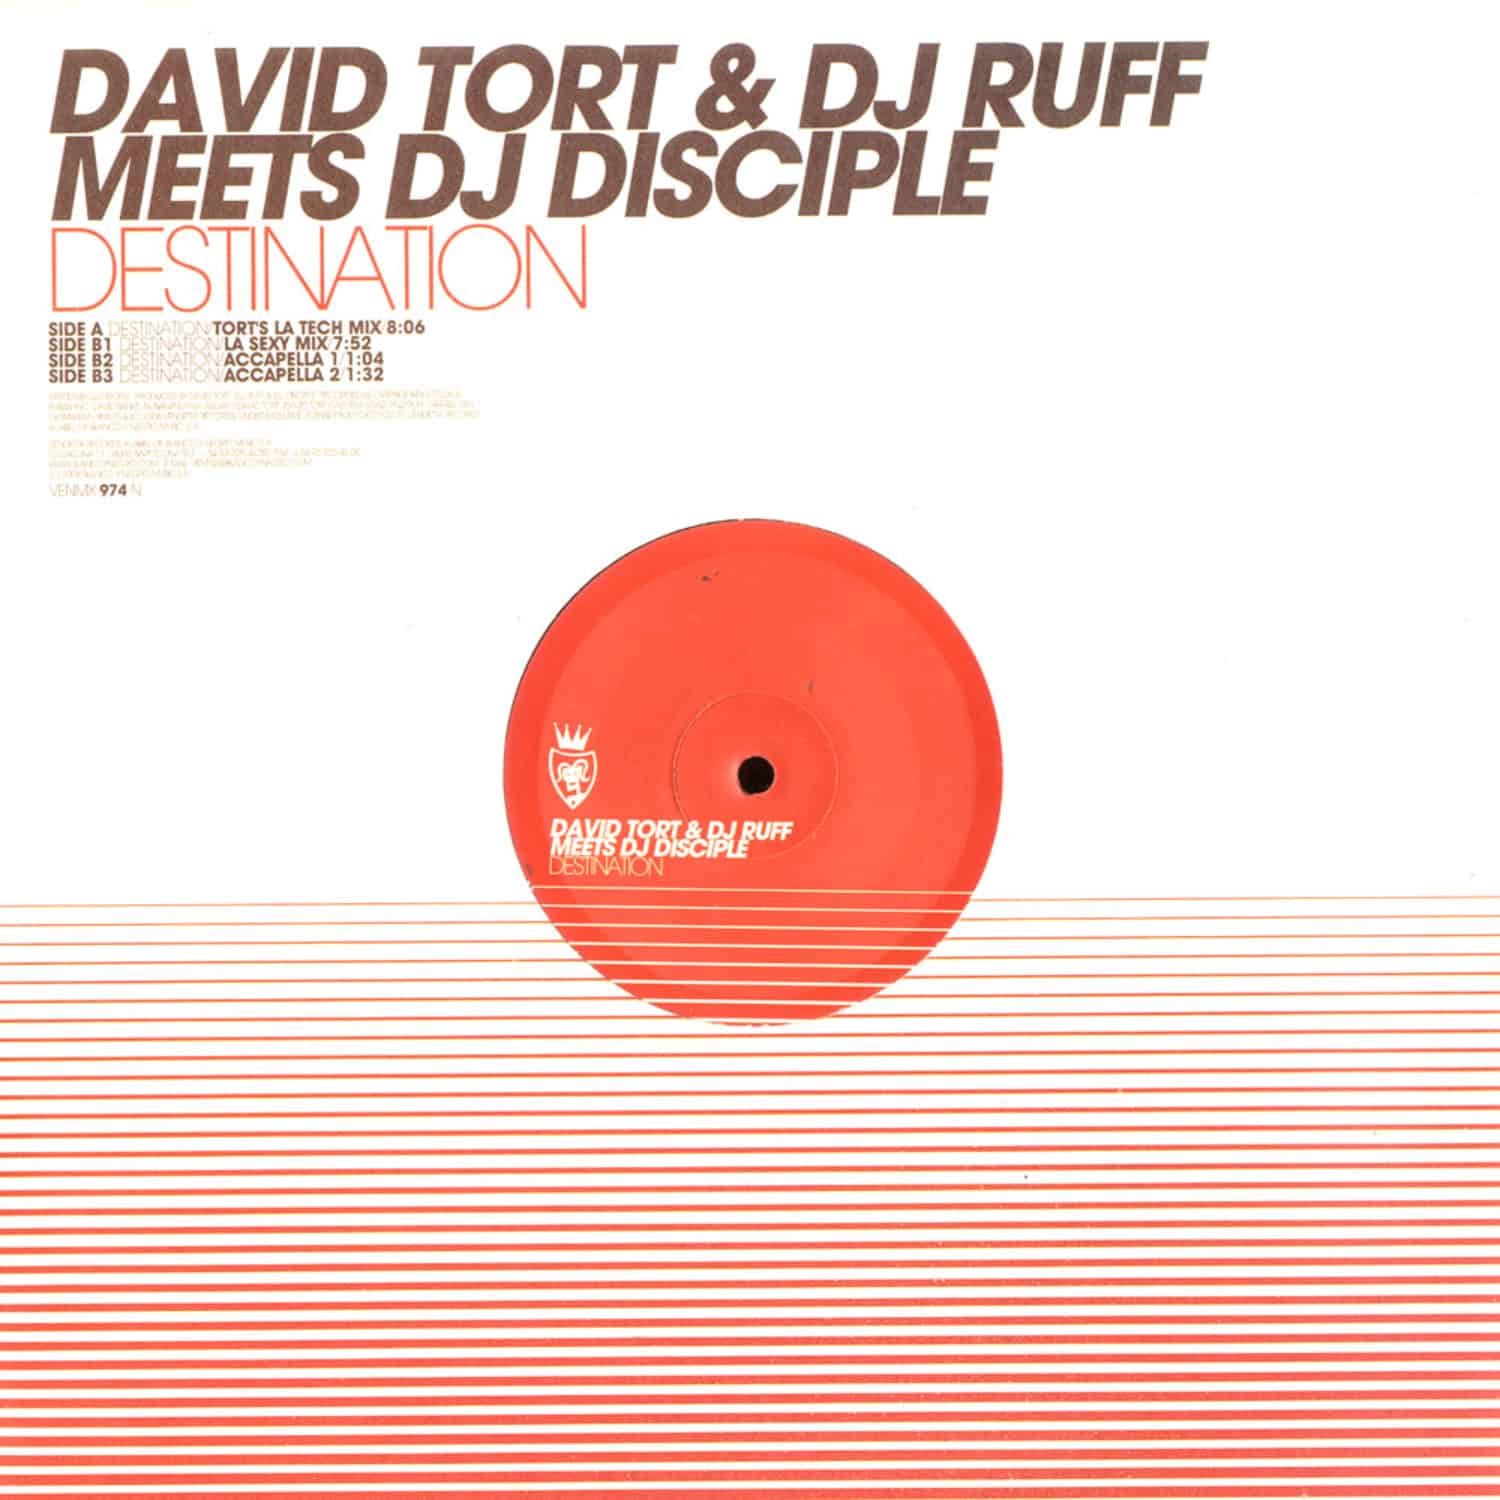 David Tort & Dj Ruff Meets Dj Disciple - DESTINATION